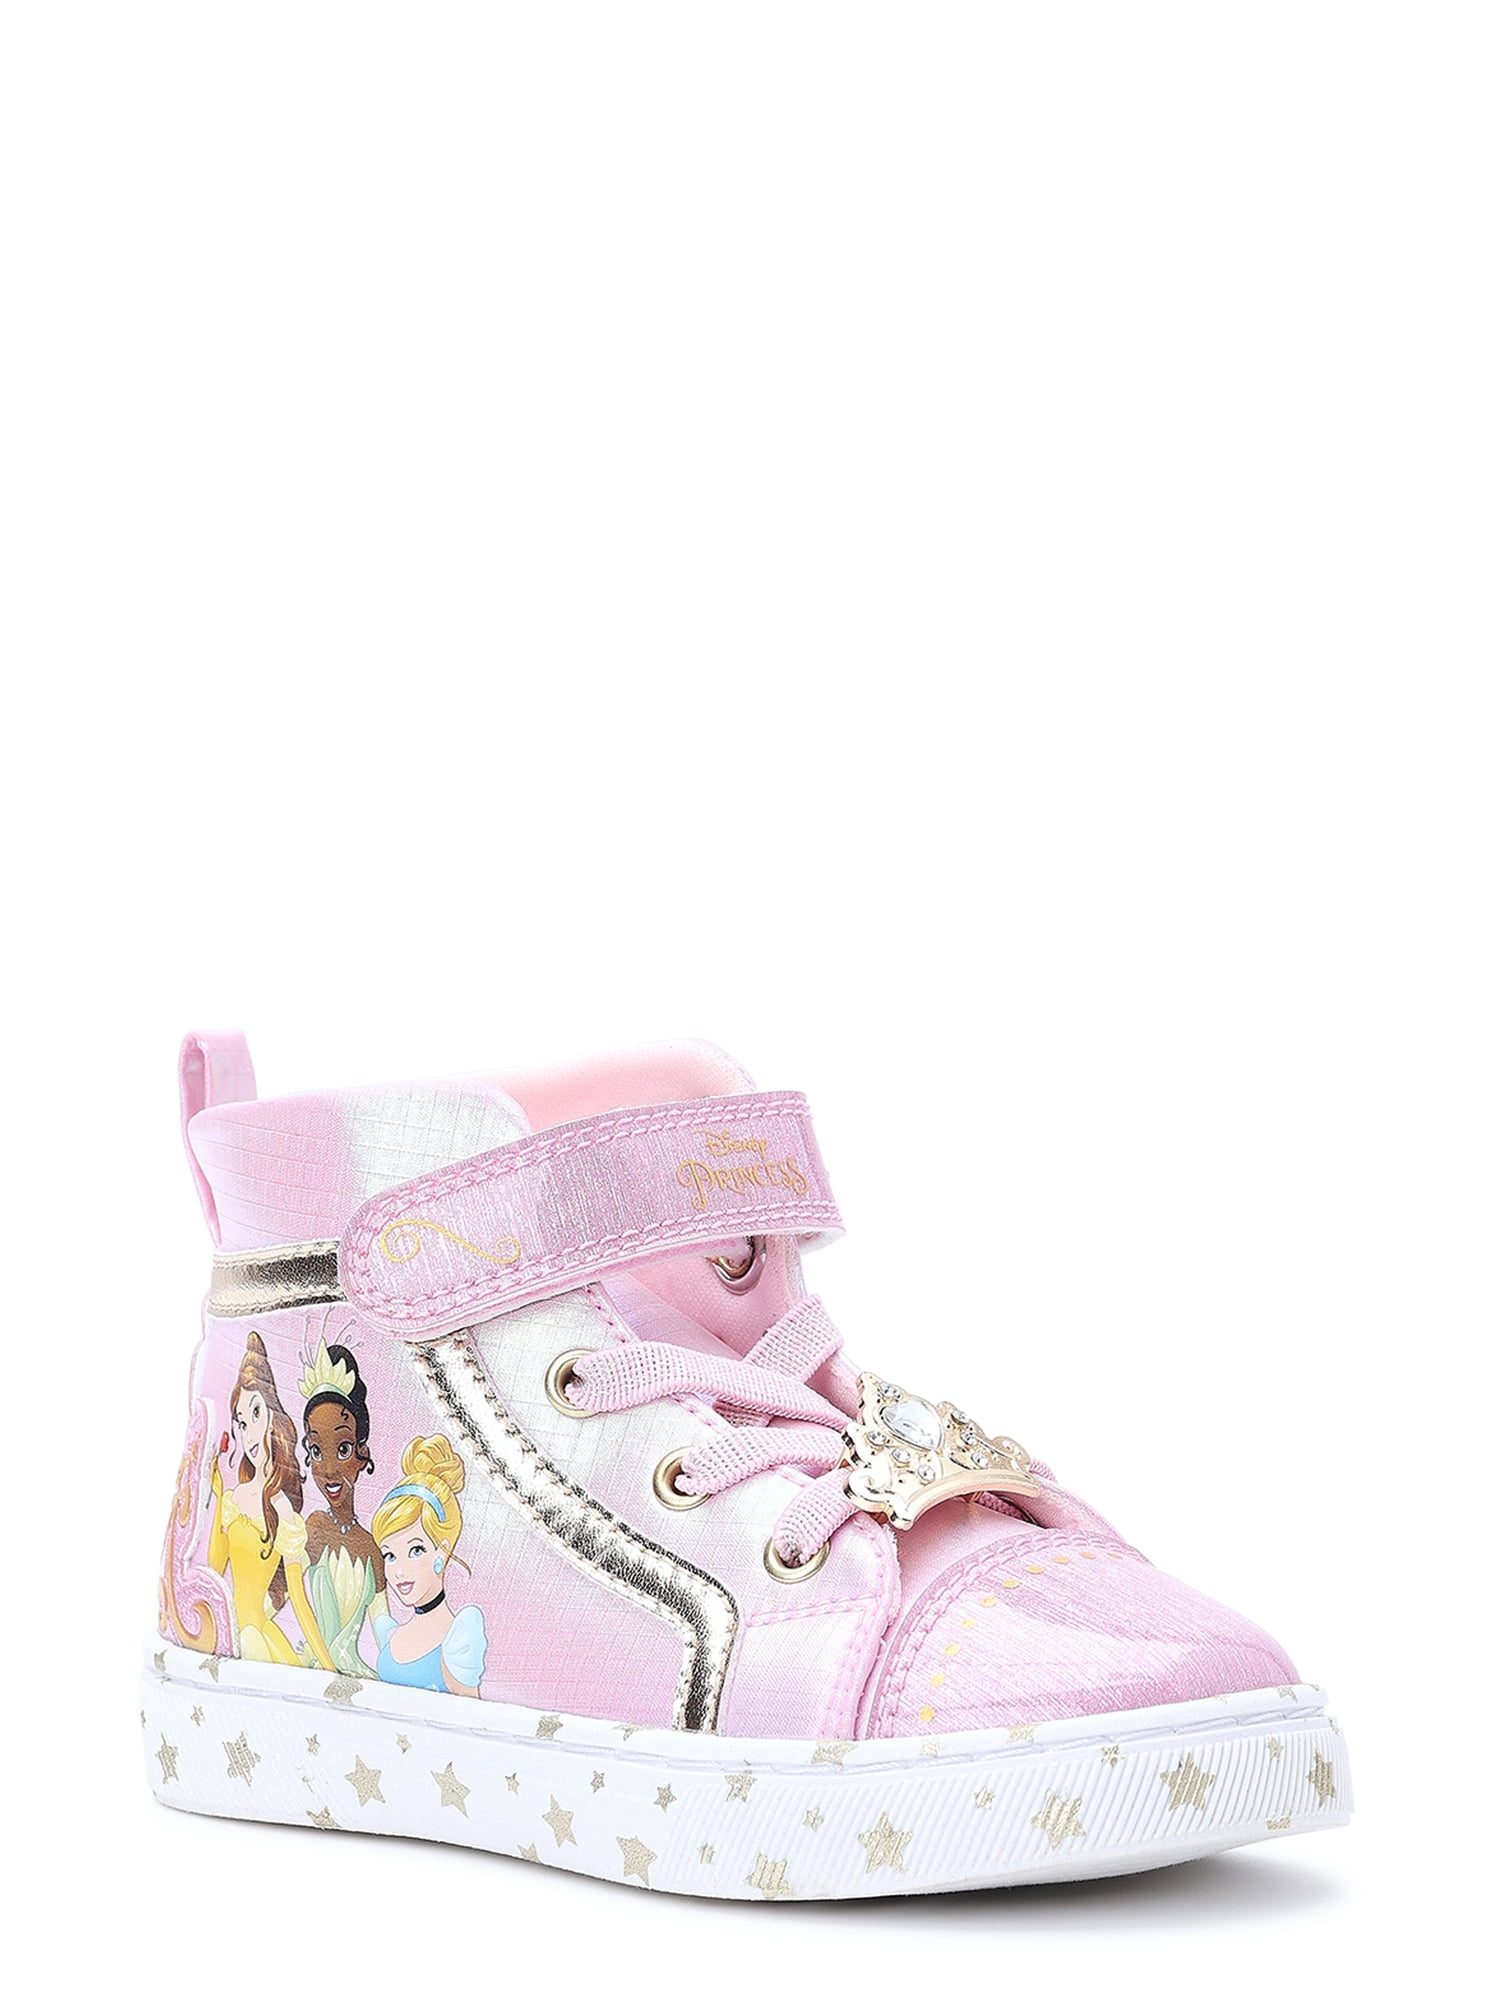 Bebe Pink Slip On Sneakers Laceless Elastic Strap Shoes Toddler Girls -  beyond exchange